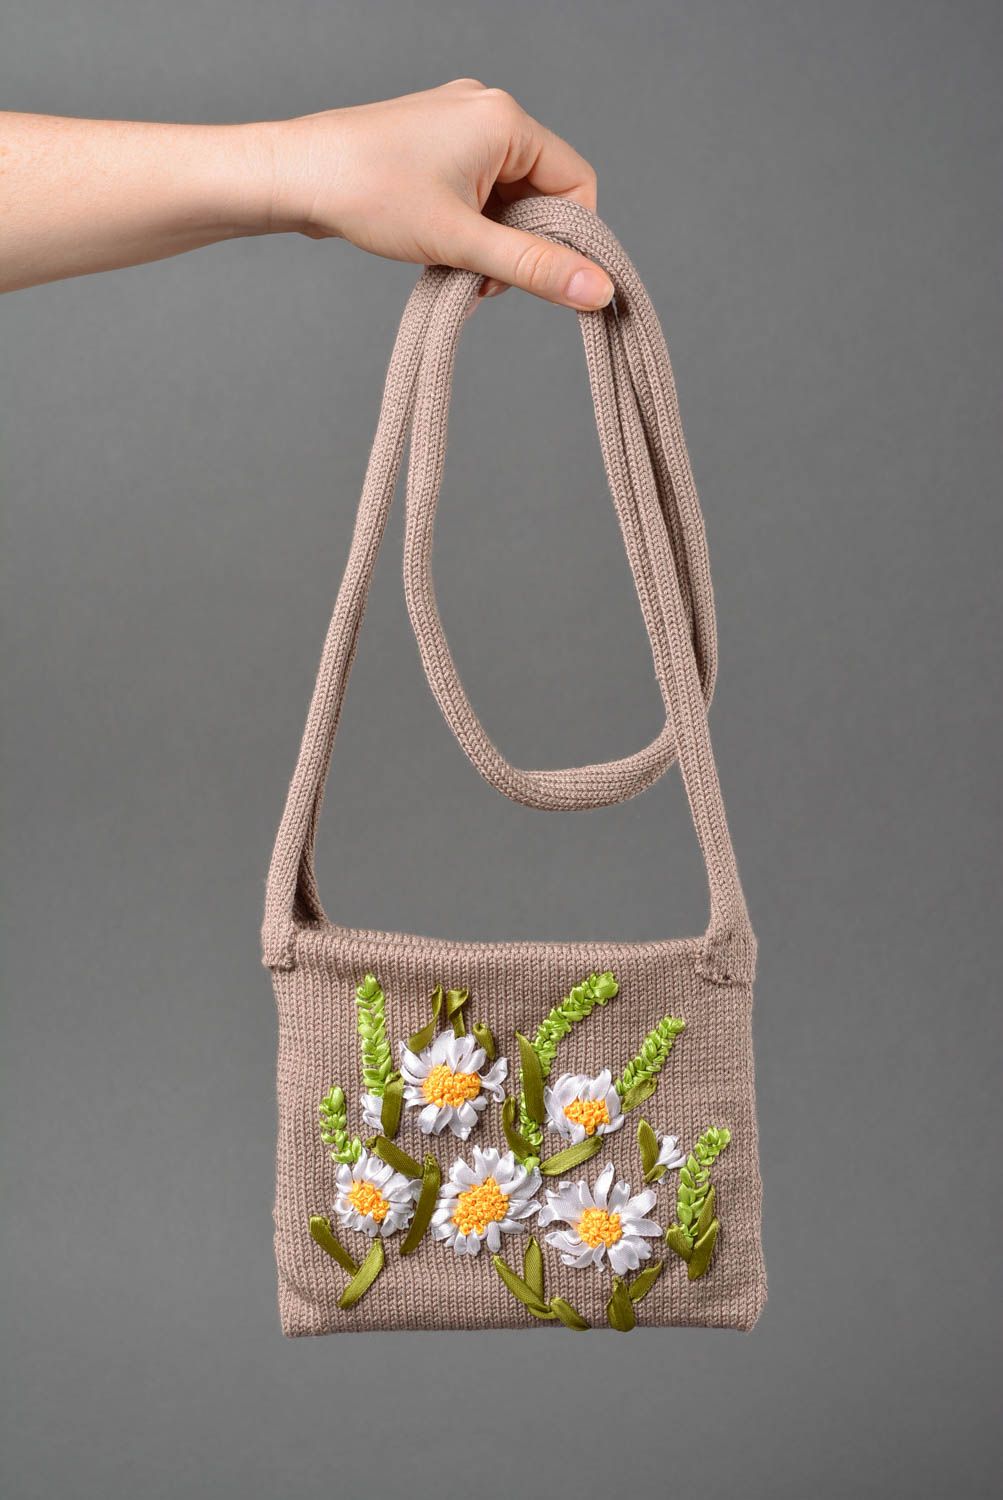 Unusual handmade knitted bag shoulder bag handbag designs fashion accessories photo 3